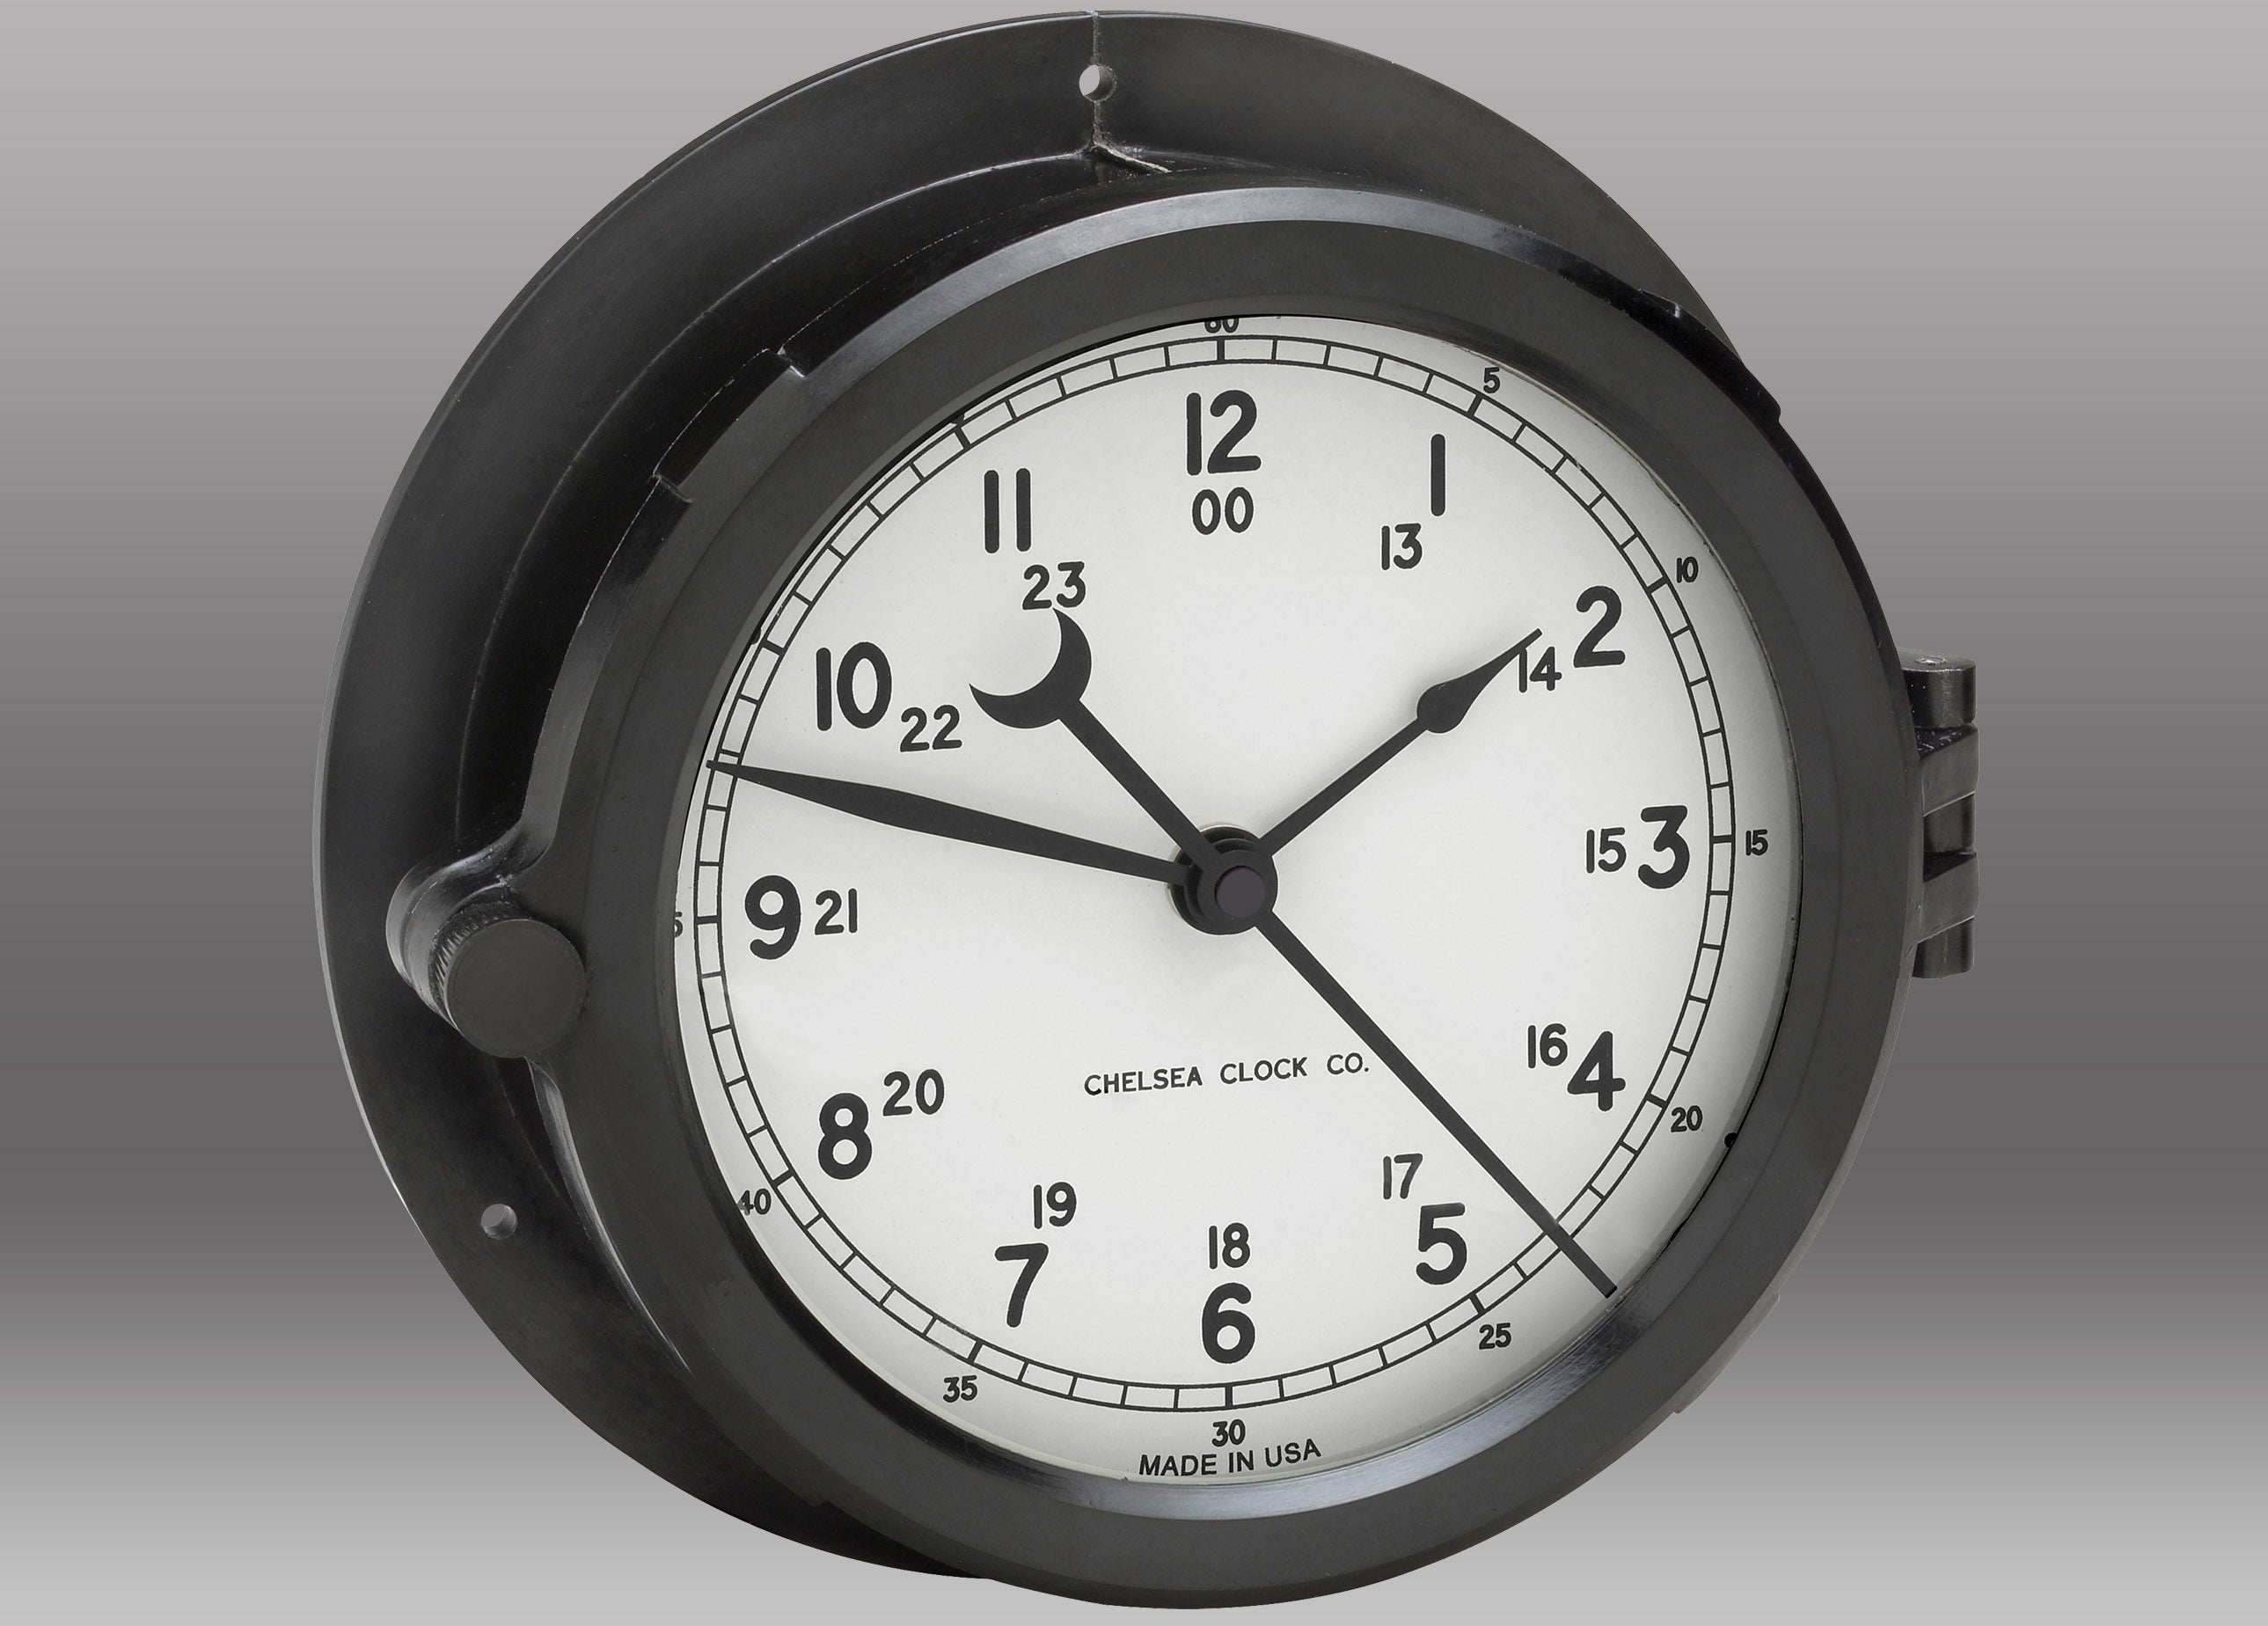 Chelsea Maritime Clocks - Nautical Clocks for Sale – Chelsea Clock